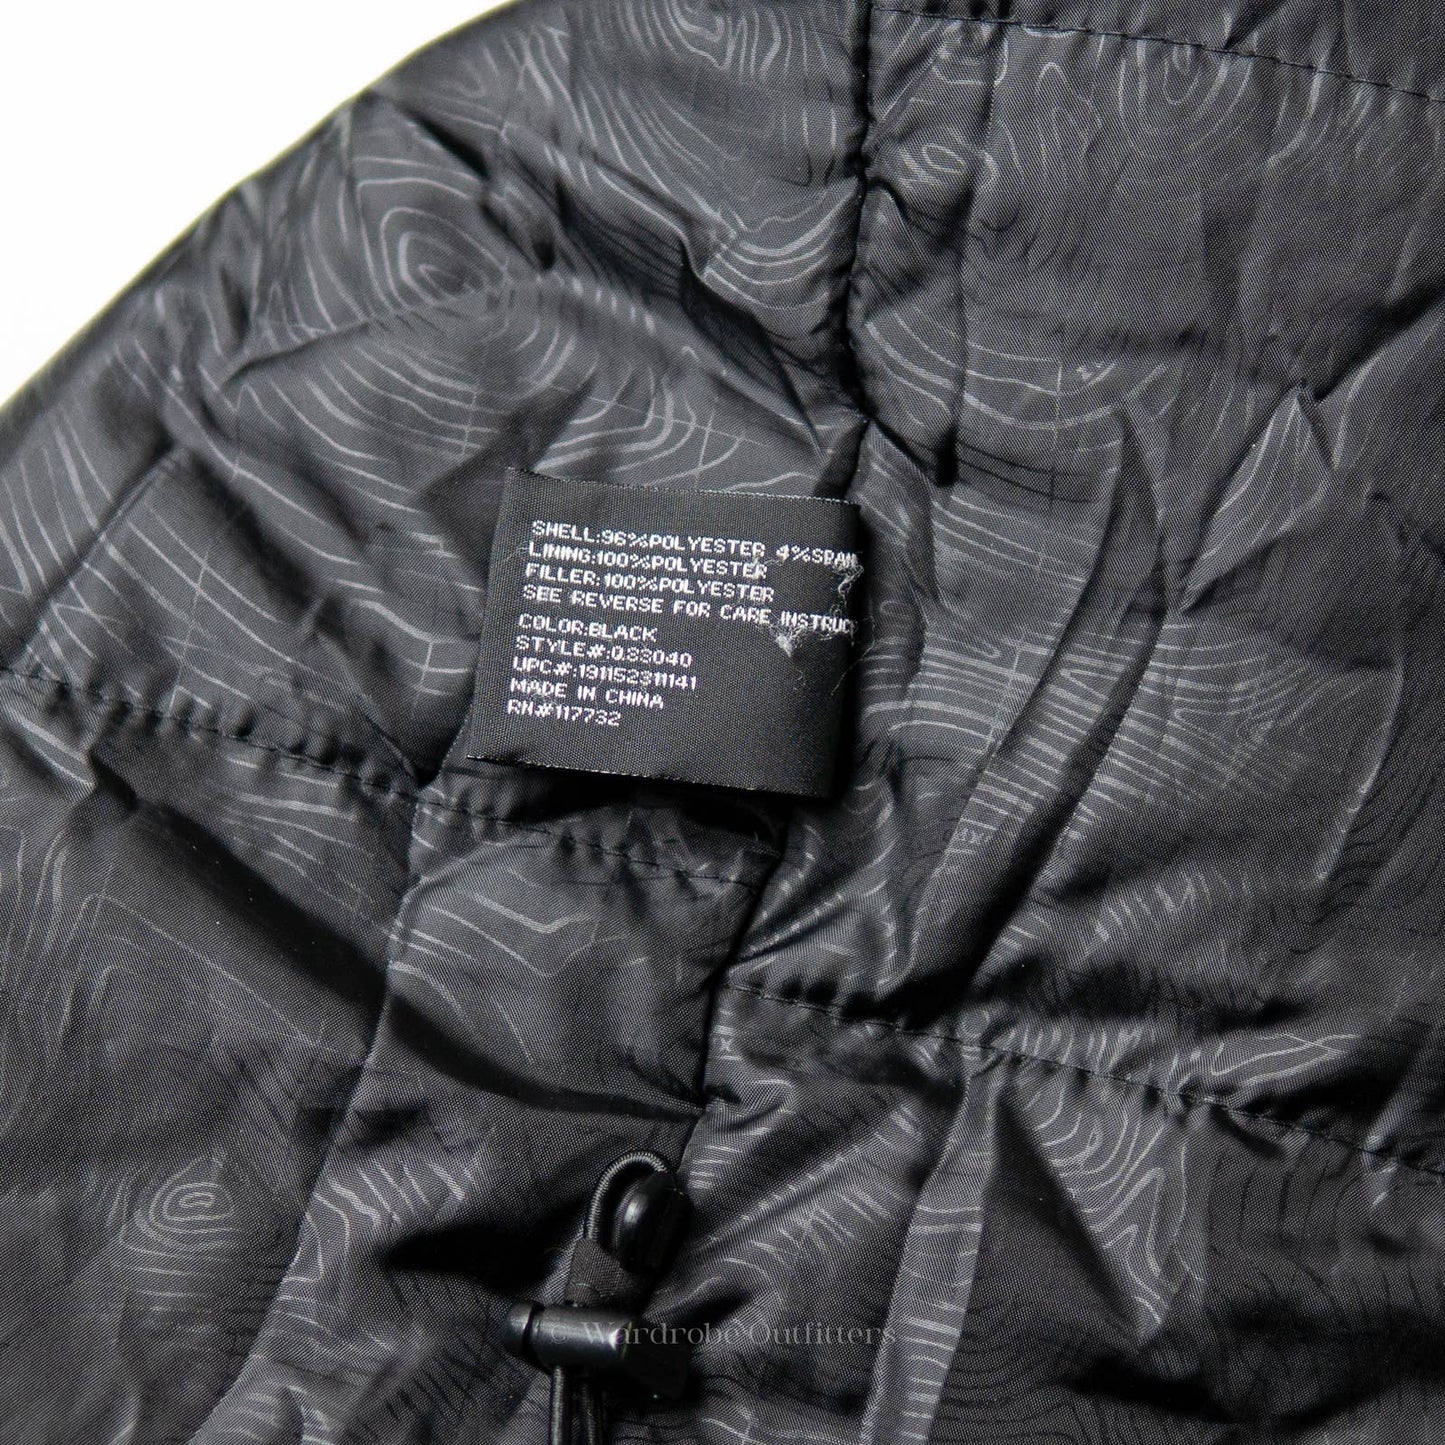 ZeroXposur Black Label Winter Ski Jacket Coat Parka - Large